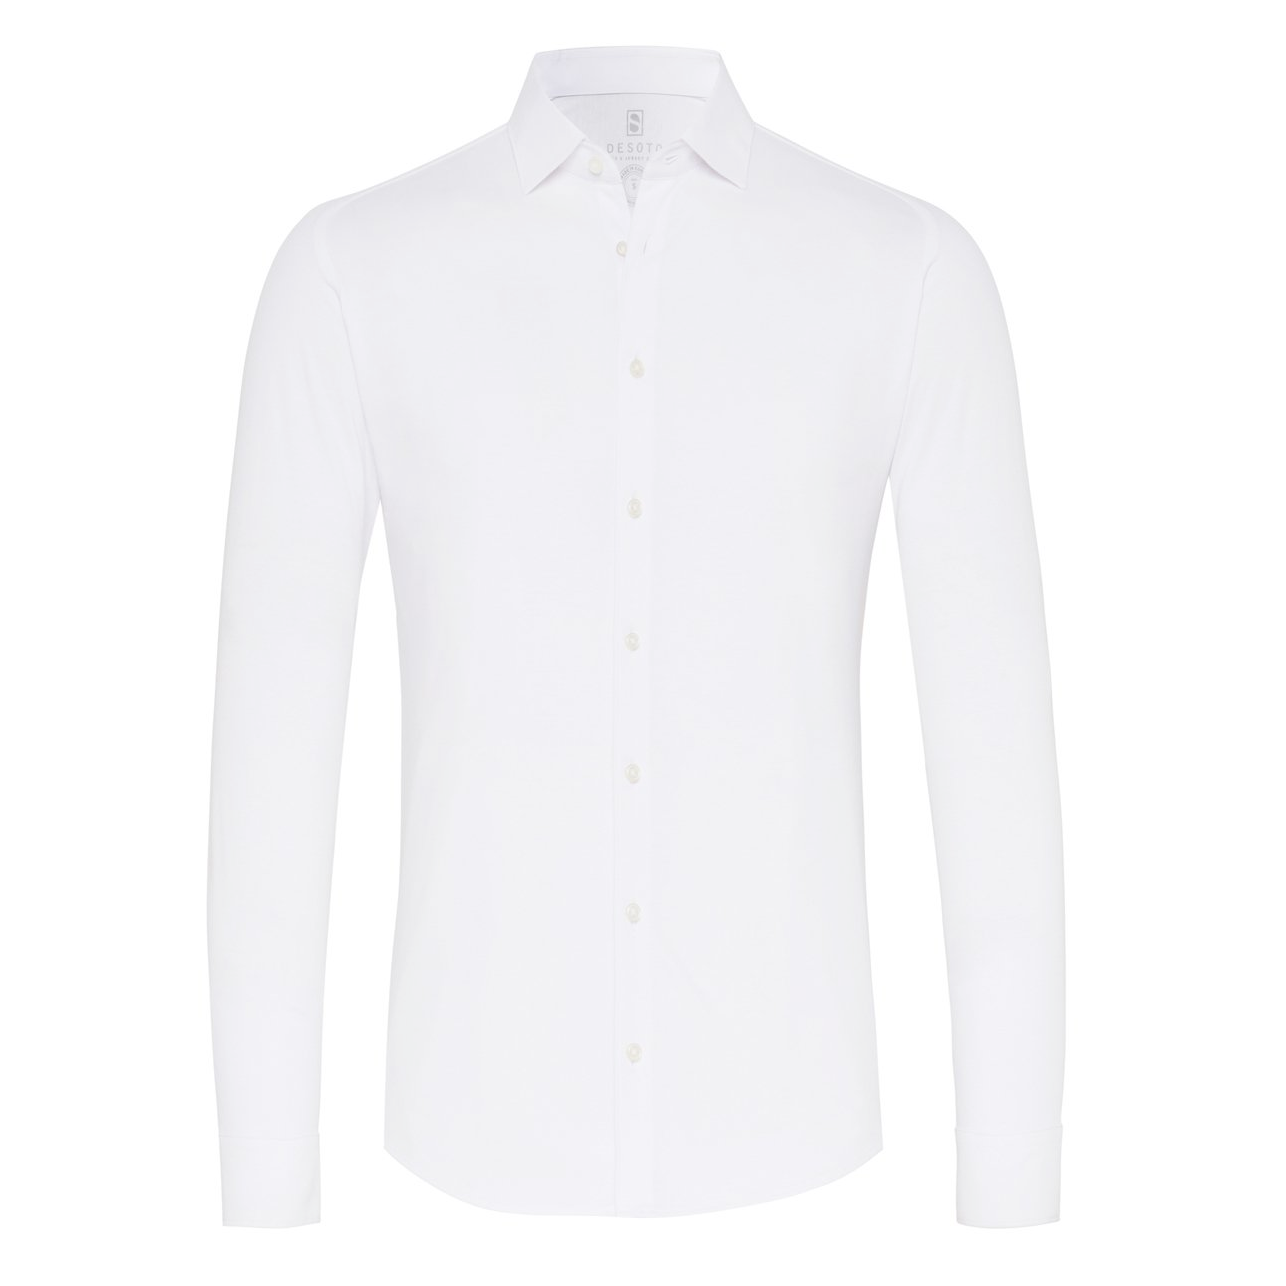 Gotstyle Fashion - Desoto Collar Shirts Basic Jersey Shirt with Kent Collar - White